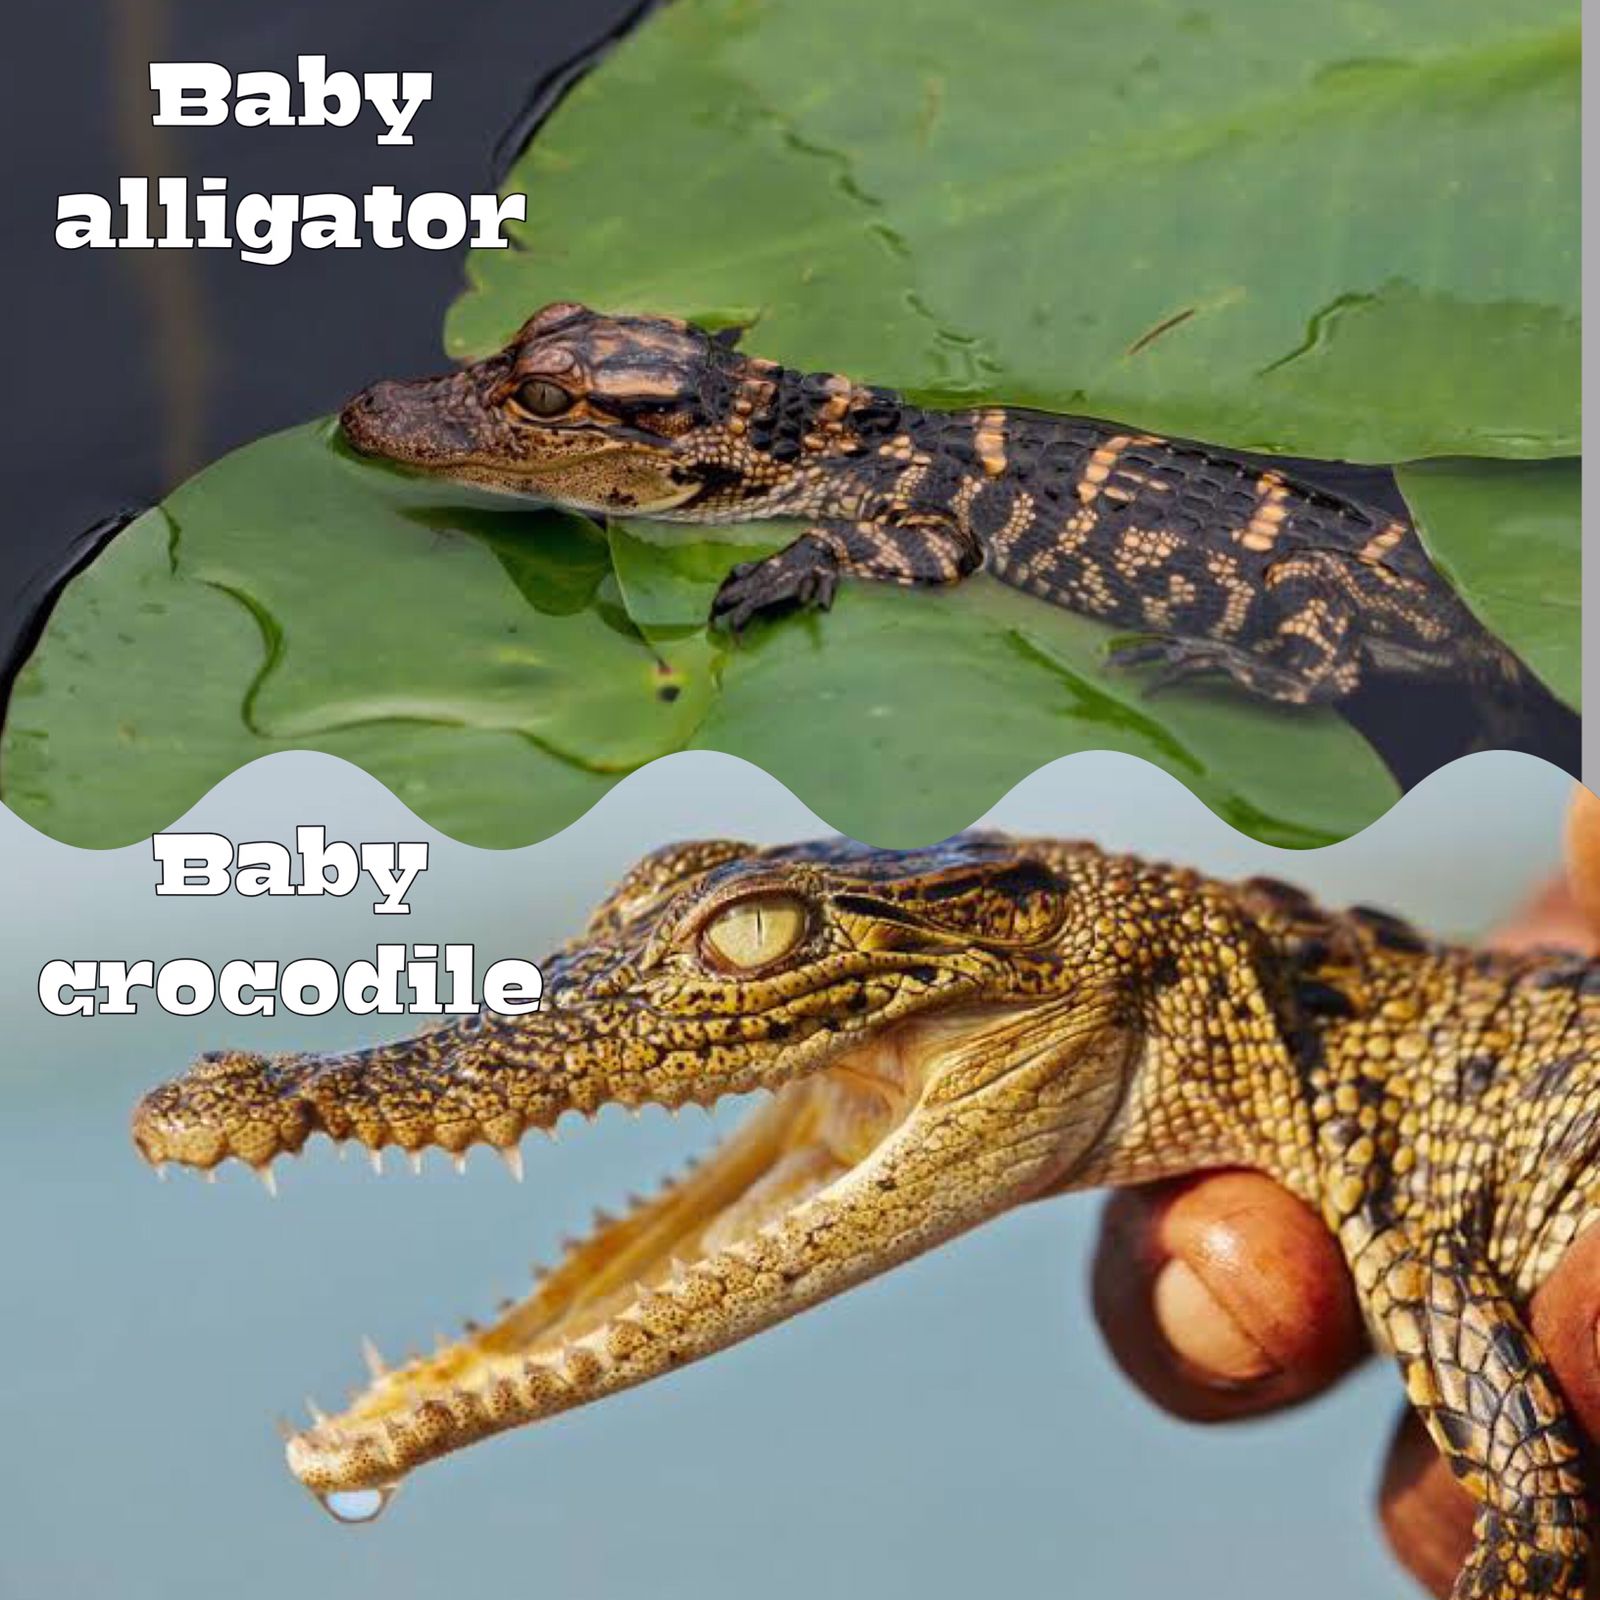 Baby alligator vs baby crocodile